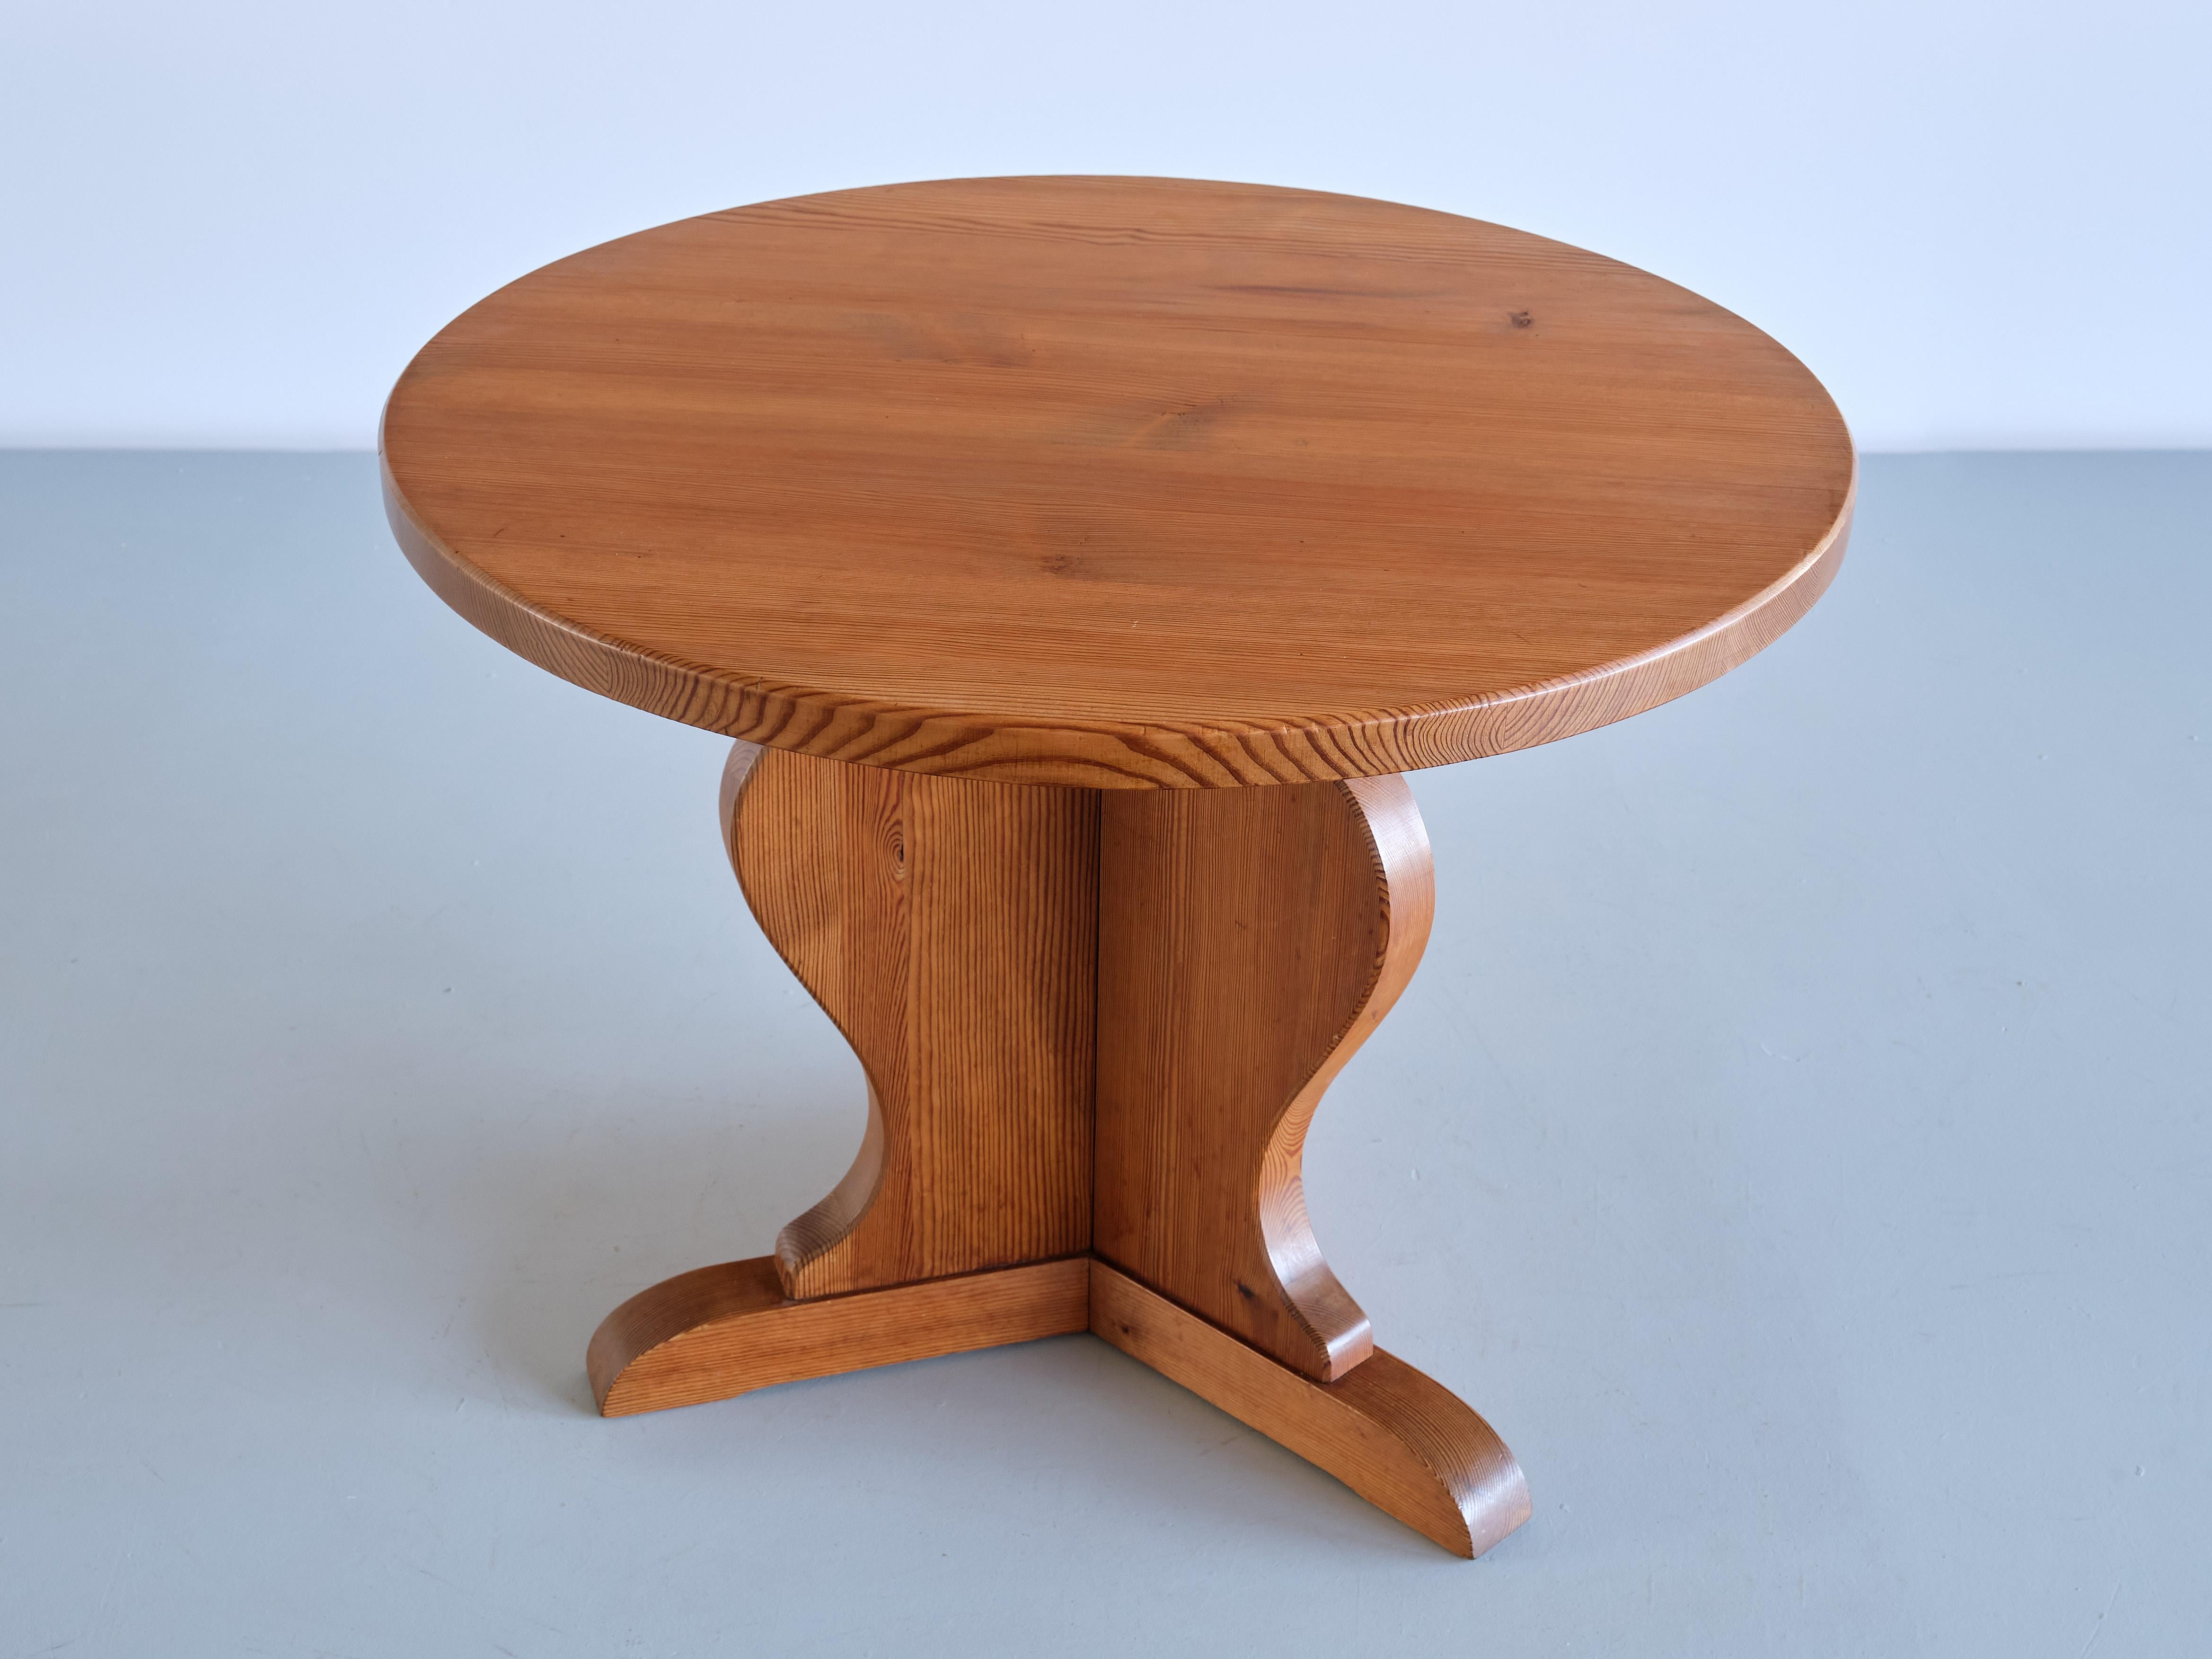 Scandinavian Modern Axel Einar Hjorth 'Lovö' Occasional Table in Pine, Nordiska Kompaniet, 1930s